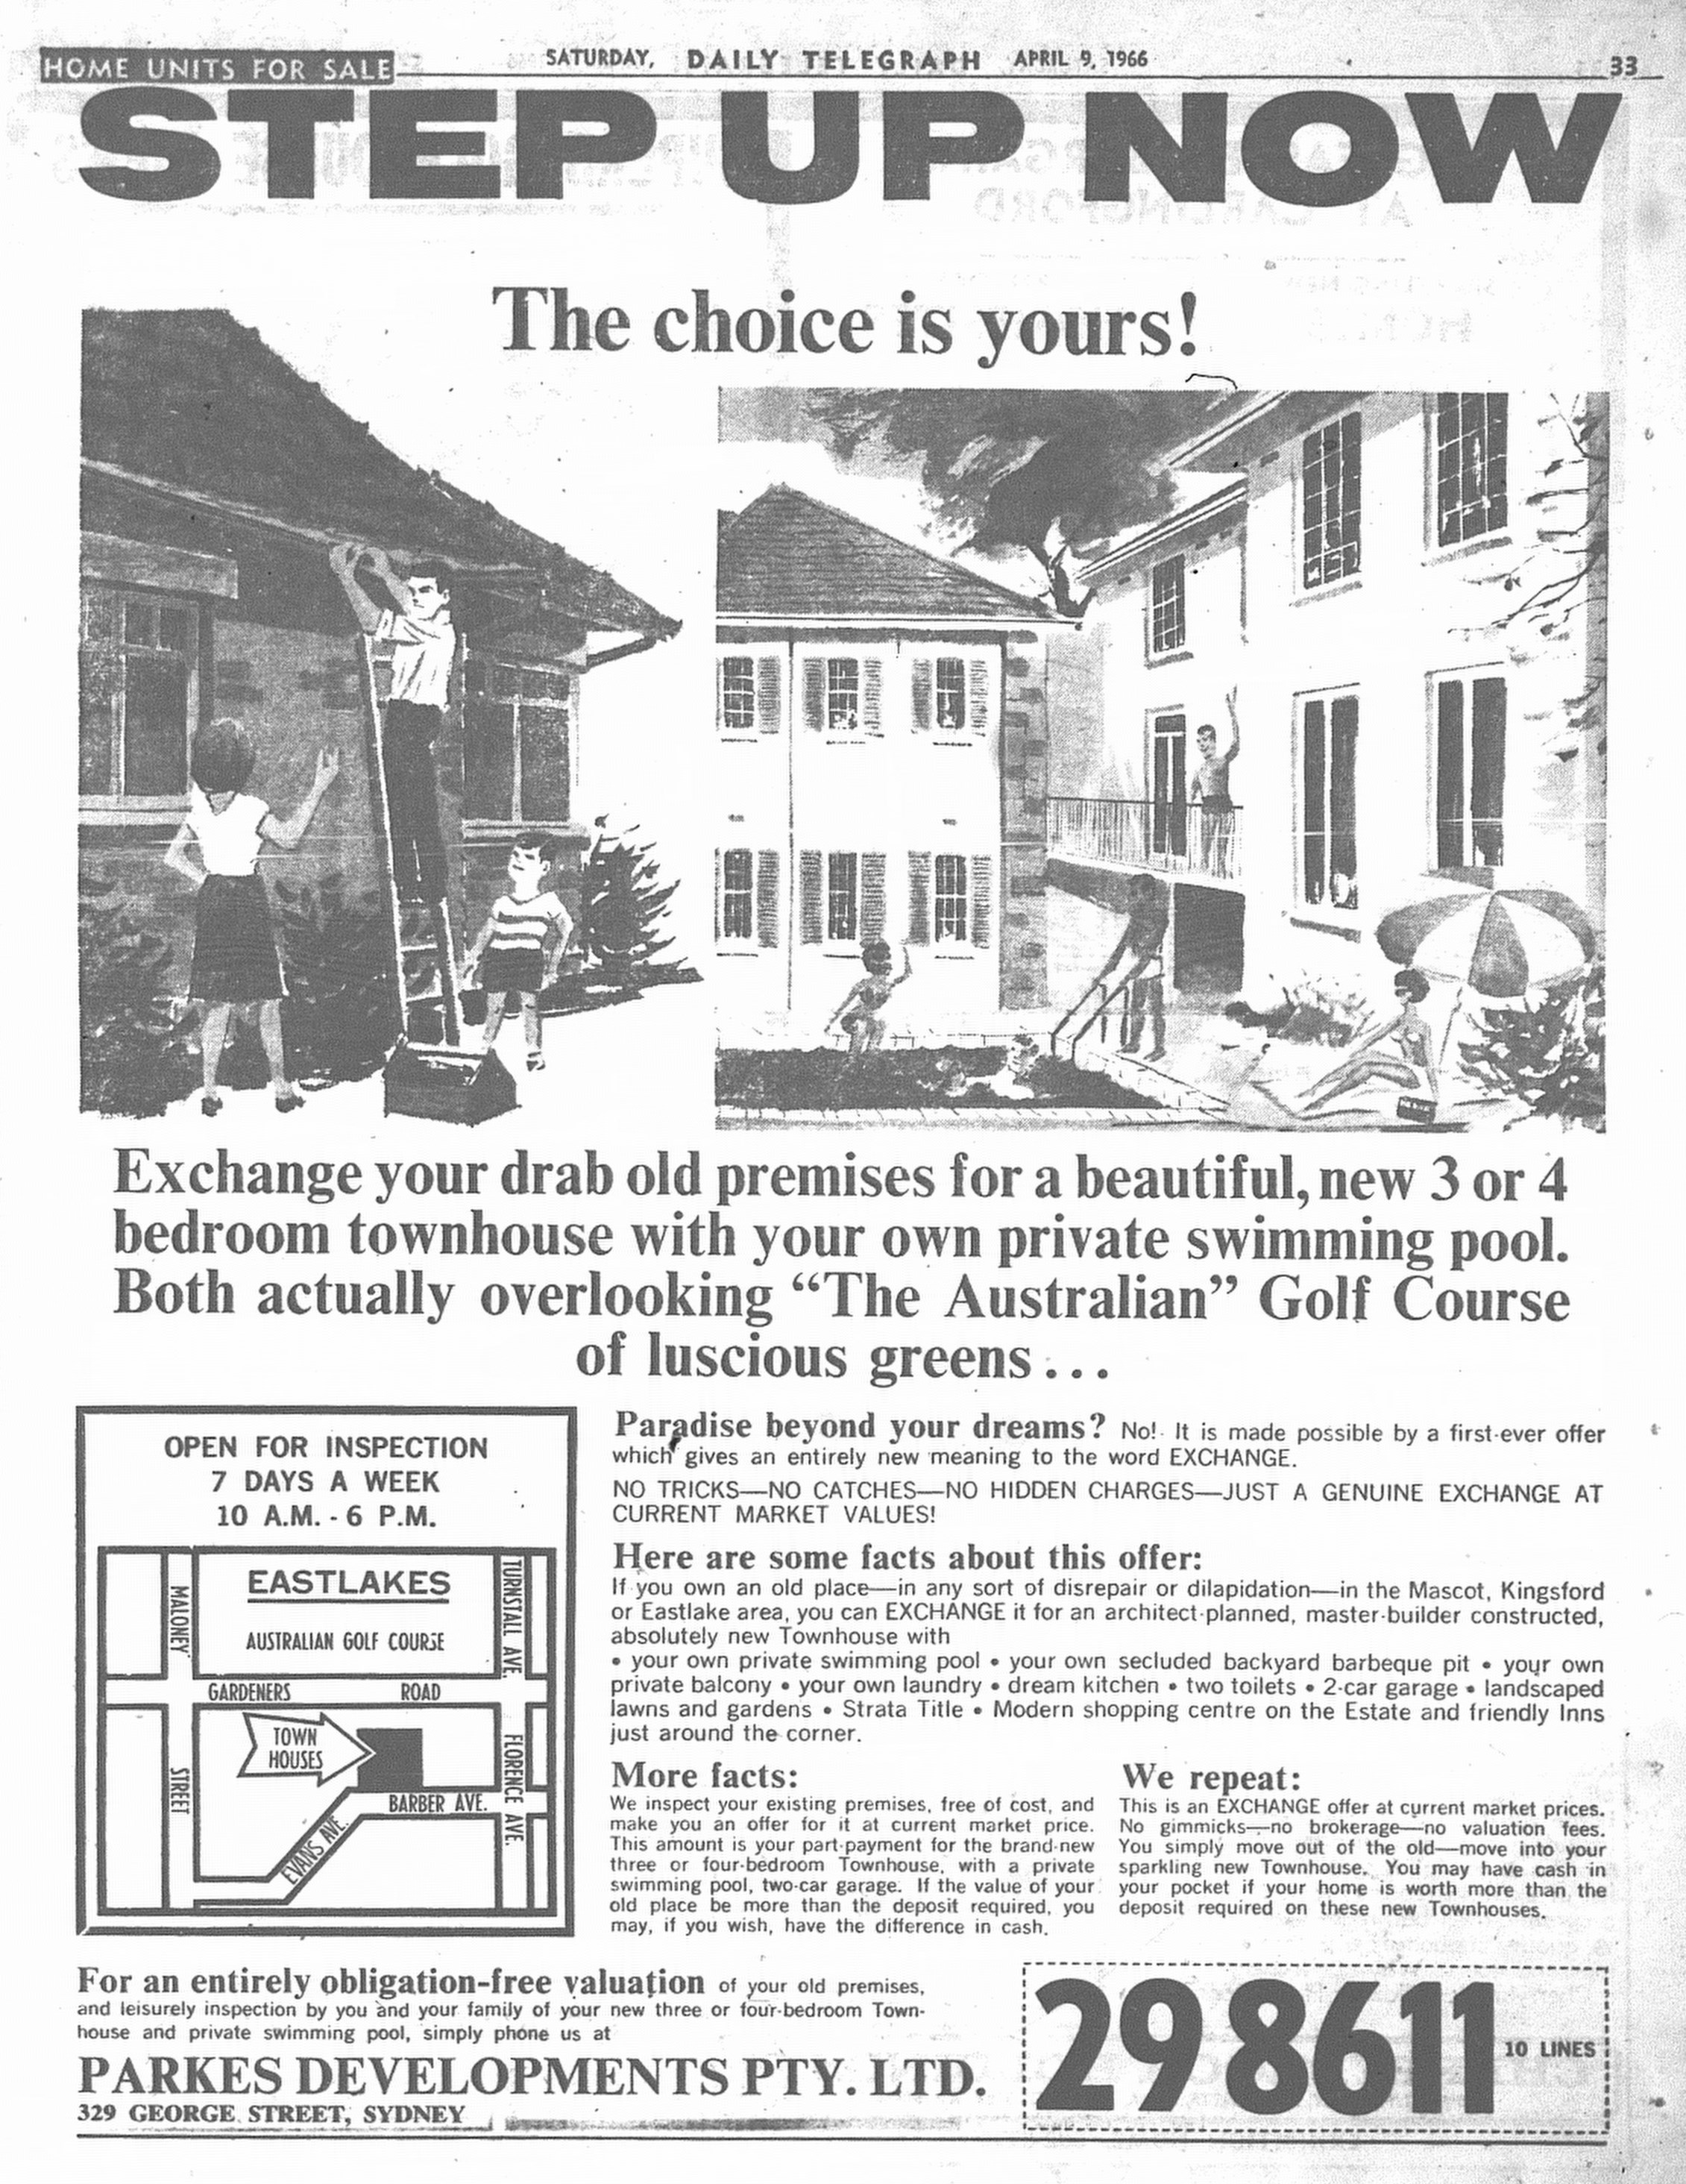 Parkes Developments Eastlakes April 9 1966 daily telegraph 33